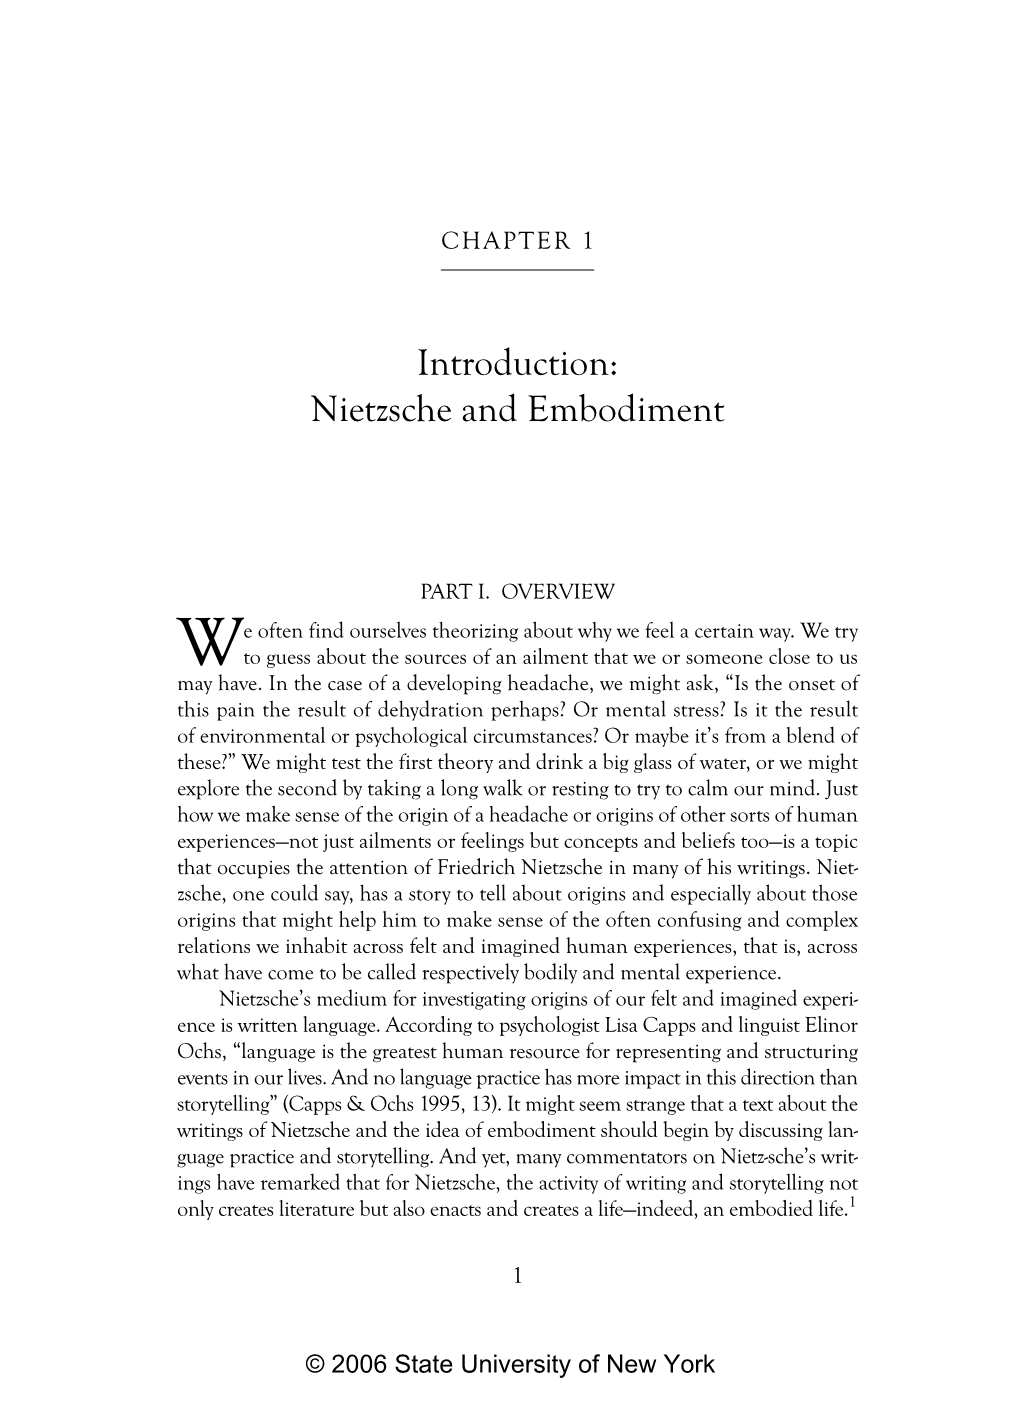 Introduction: Nietzsche and Embodiment